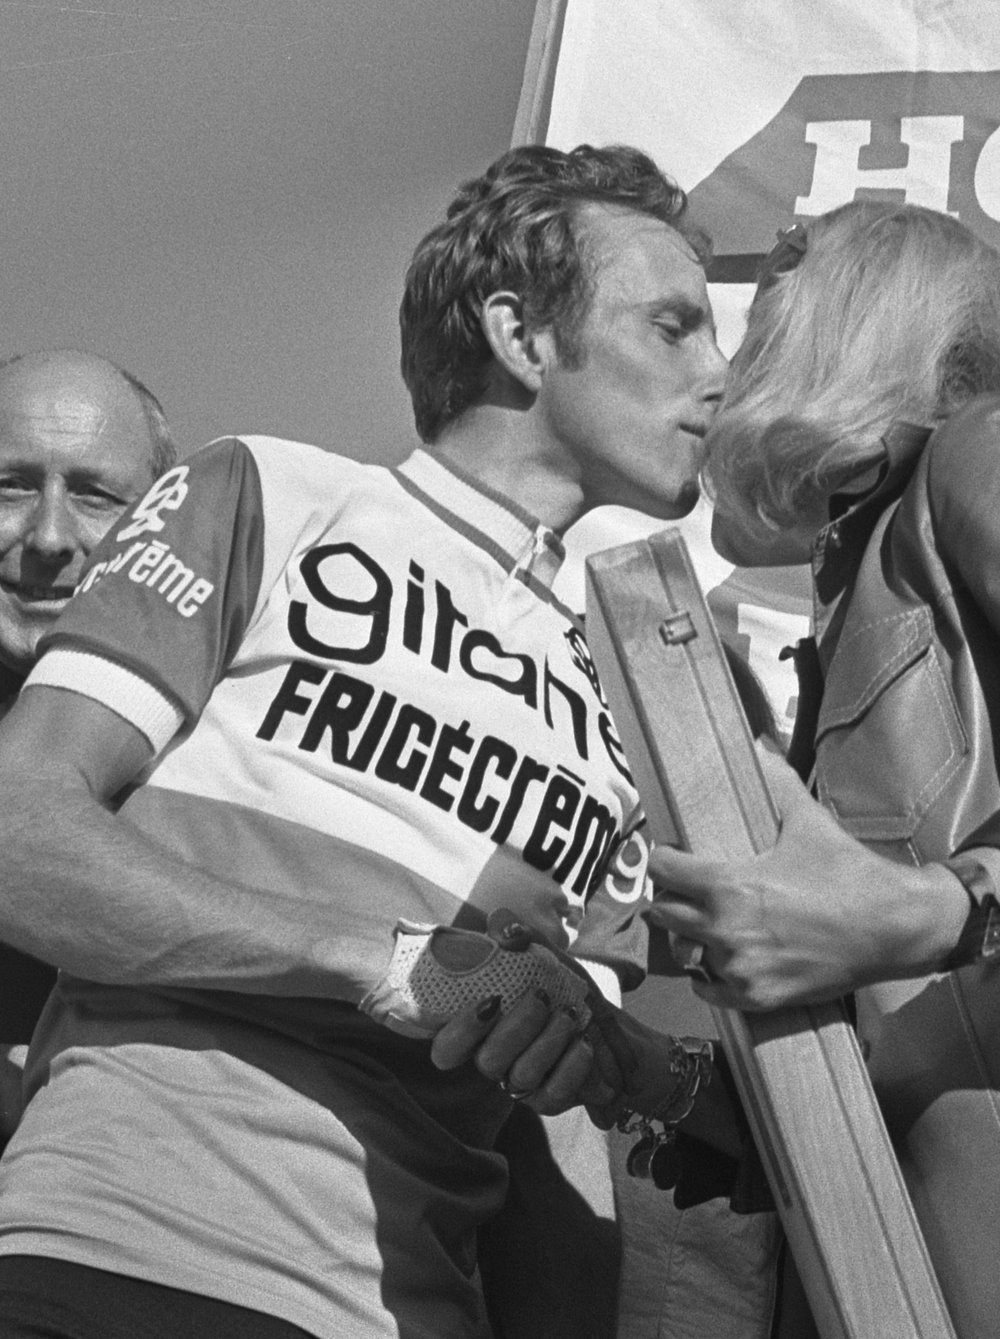 1973 ðŸ‡«ðŸ‡· Gitane FrigÃ©crÃ¨me - Original pro team TT jersey